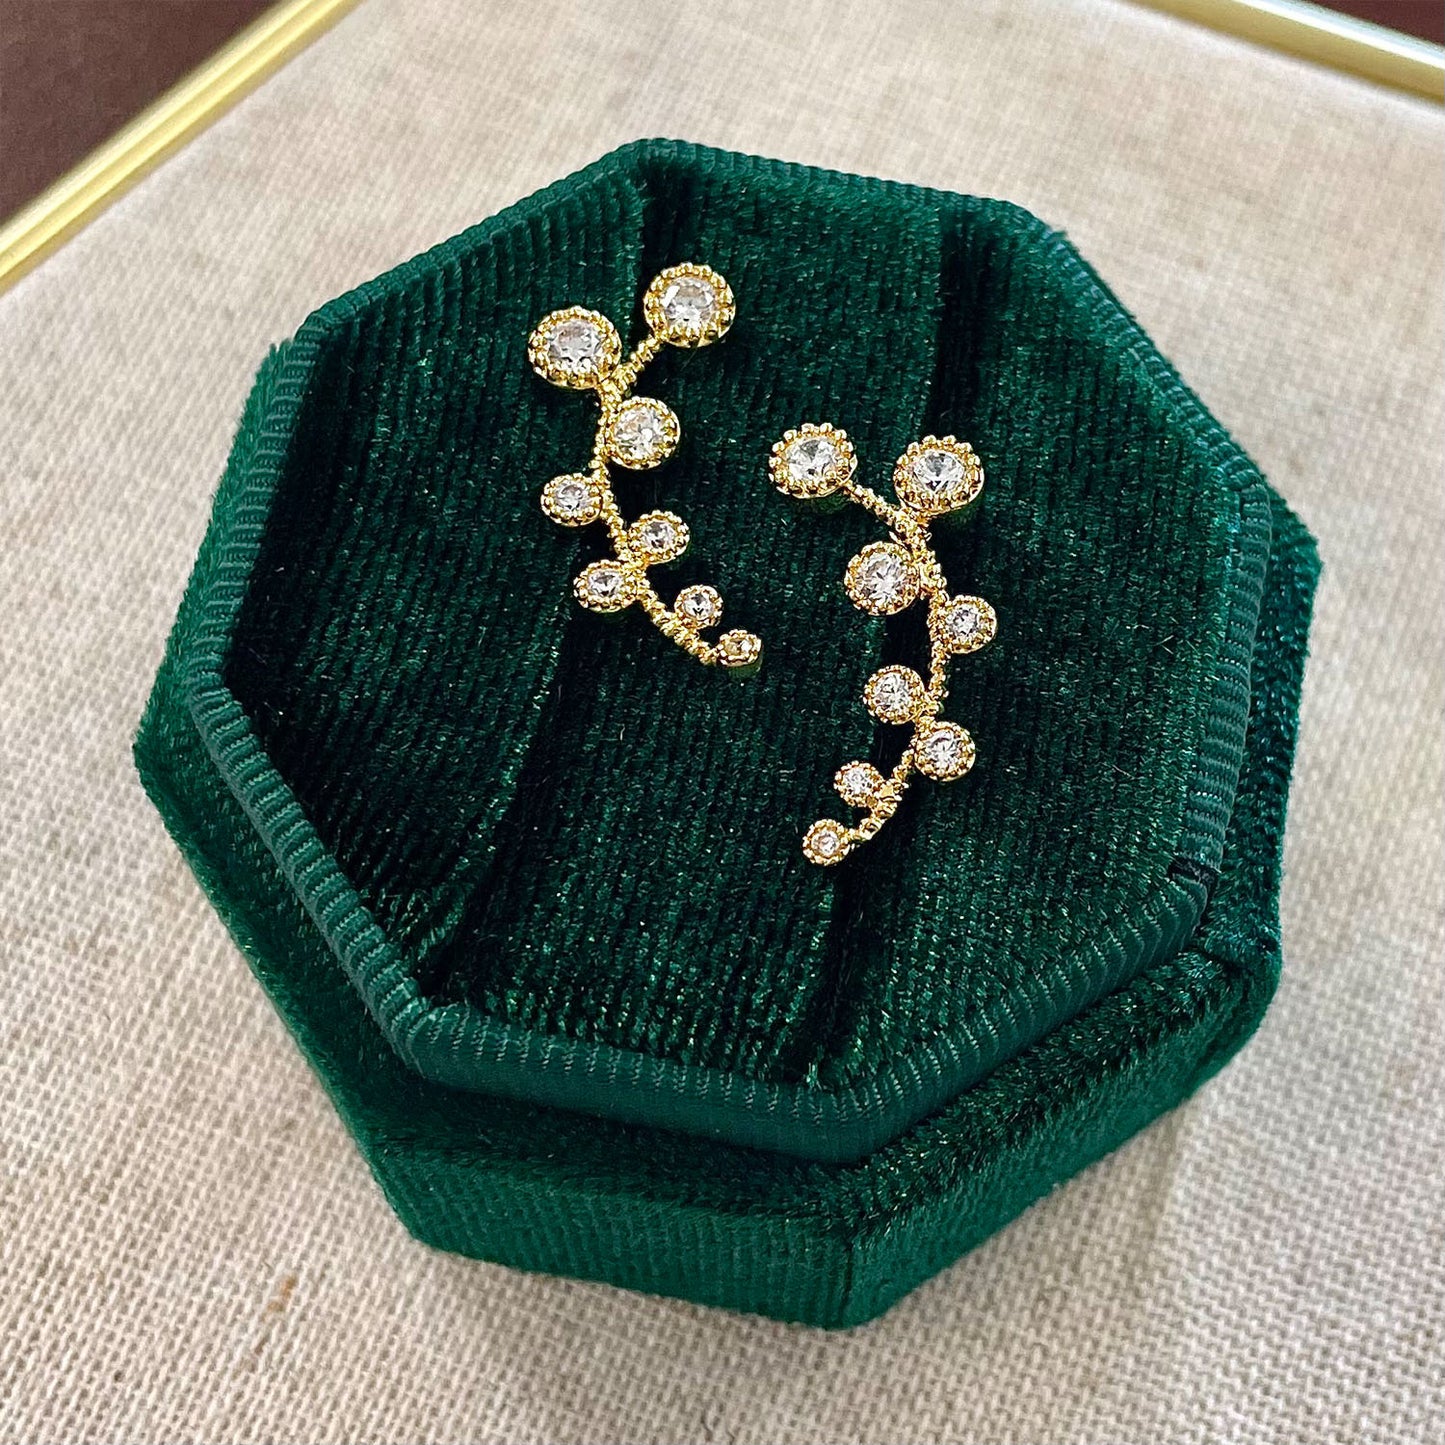 Iris CZ Diamond Crawler Earrings, Gold - Zahra Jewelry